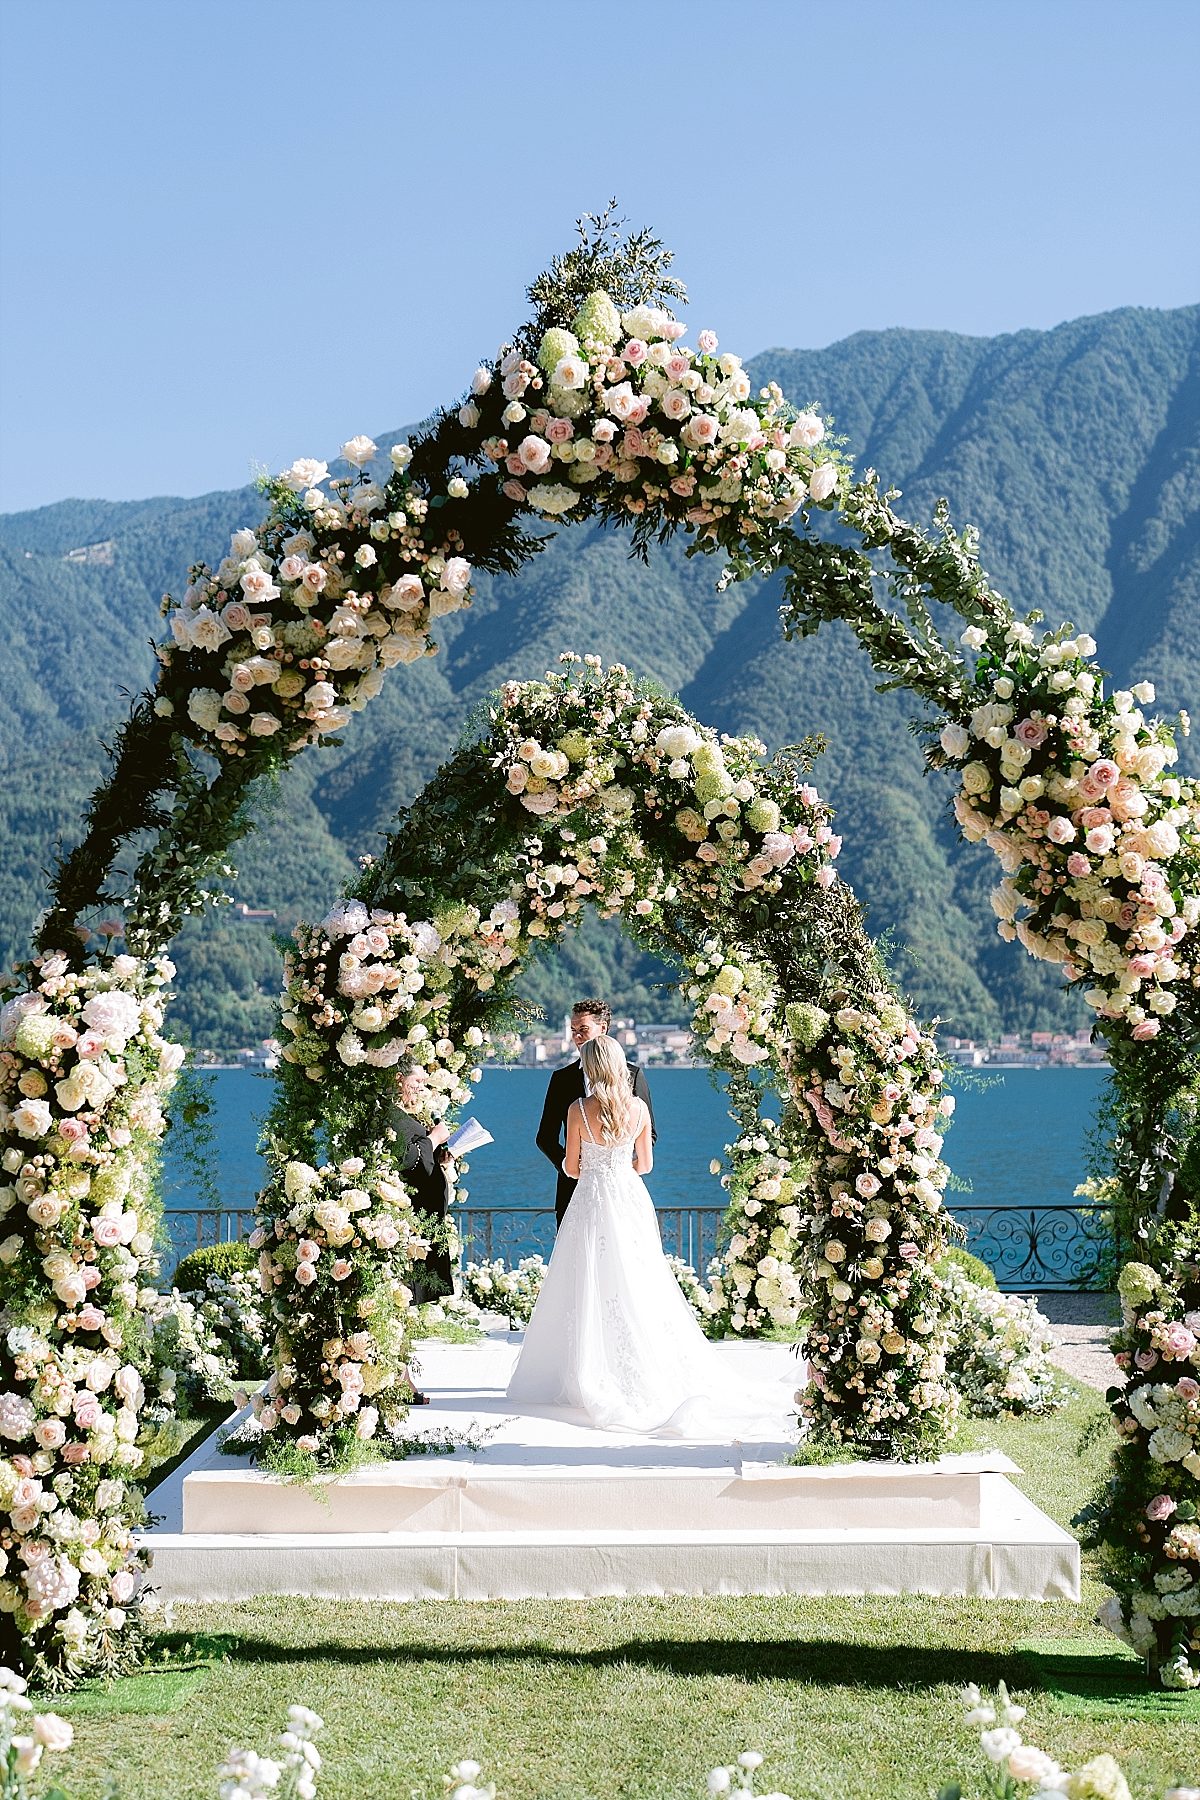 Villa Balbiano Lake como
Luxury wedding 
Photographer lake como 
Ceremony 